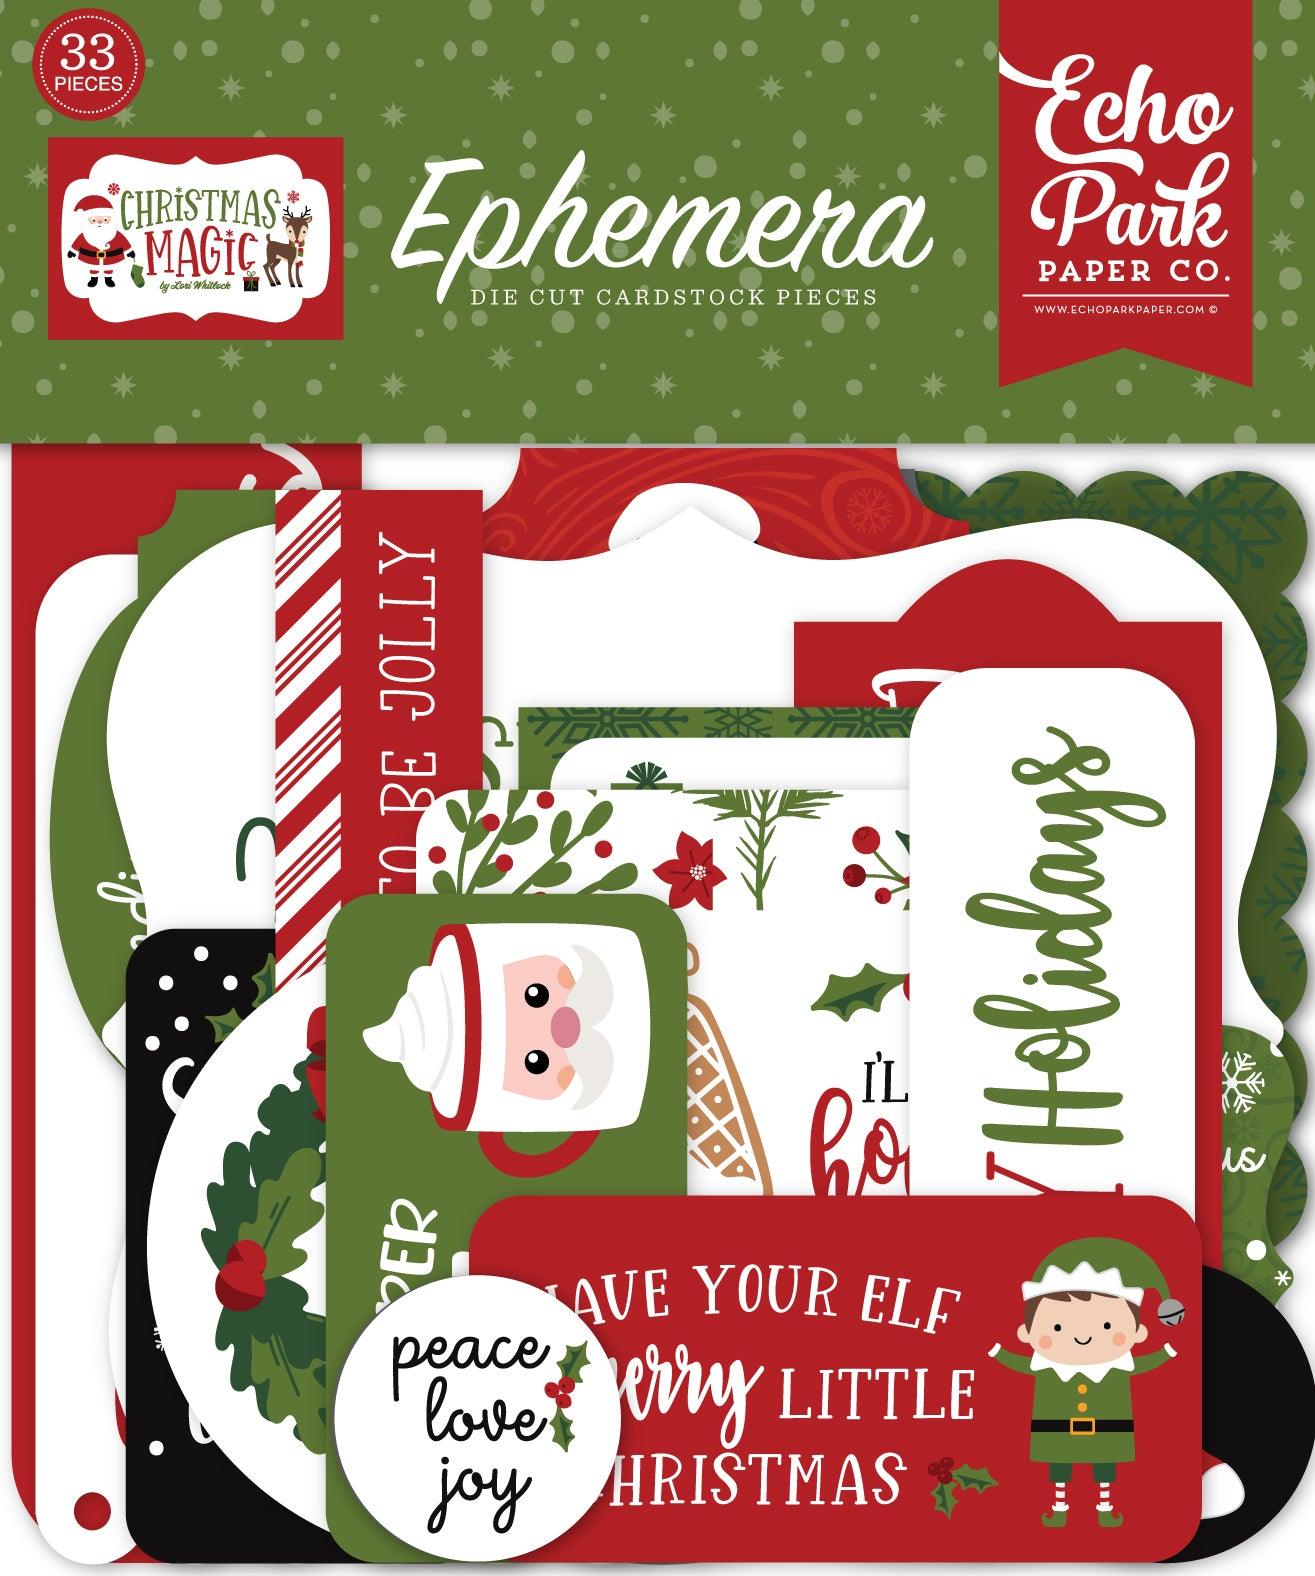 Christmas Magic Collection 5 x 5 Scrapbook Ephemera Die Cuts by Echo Park Paper - Scrapbook Supply Companies